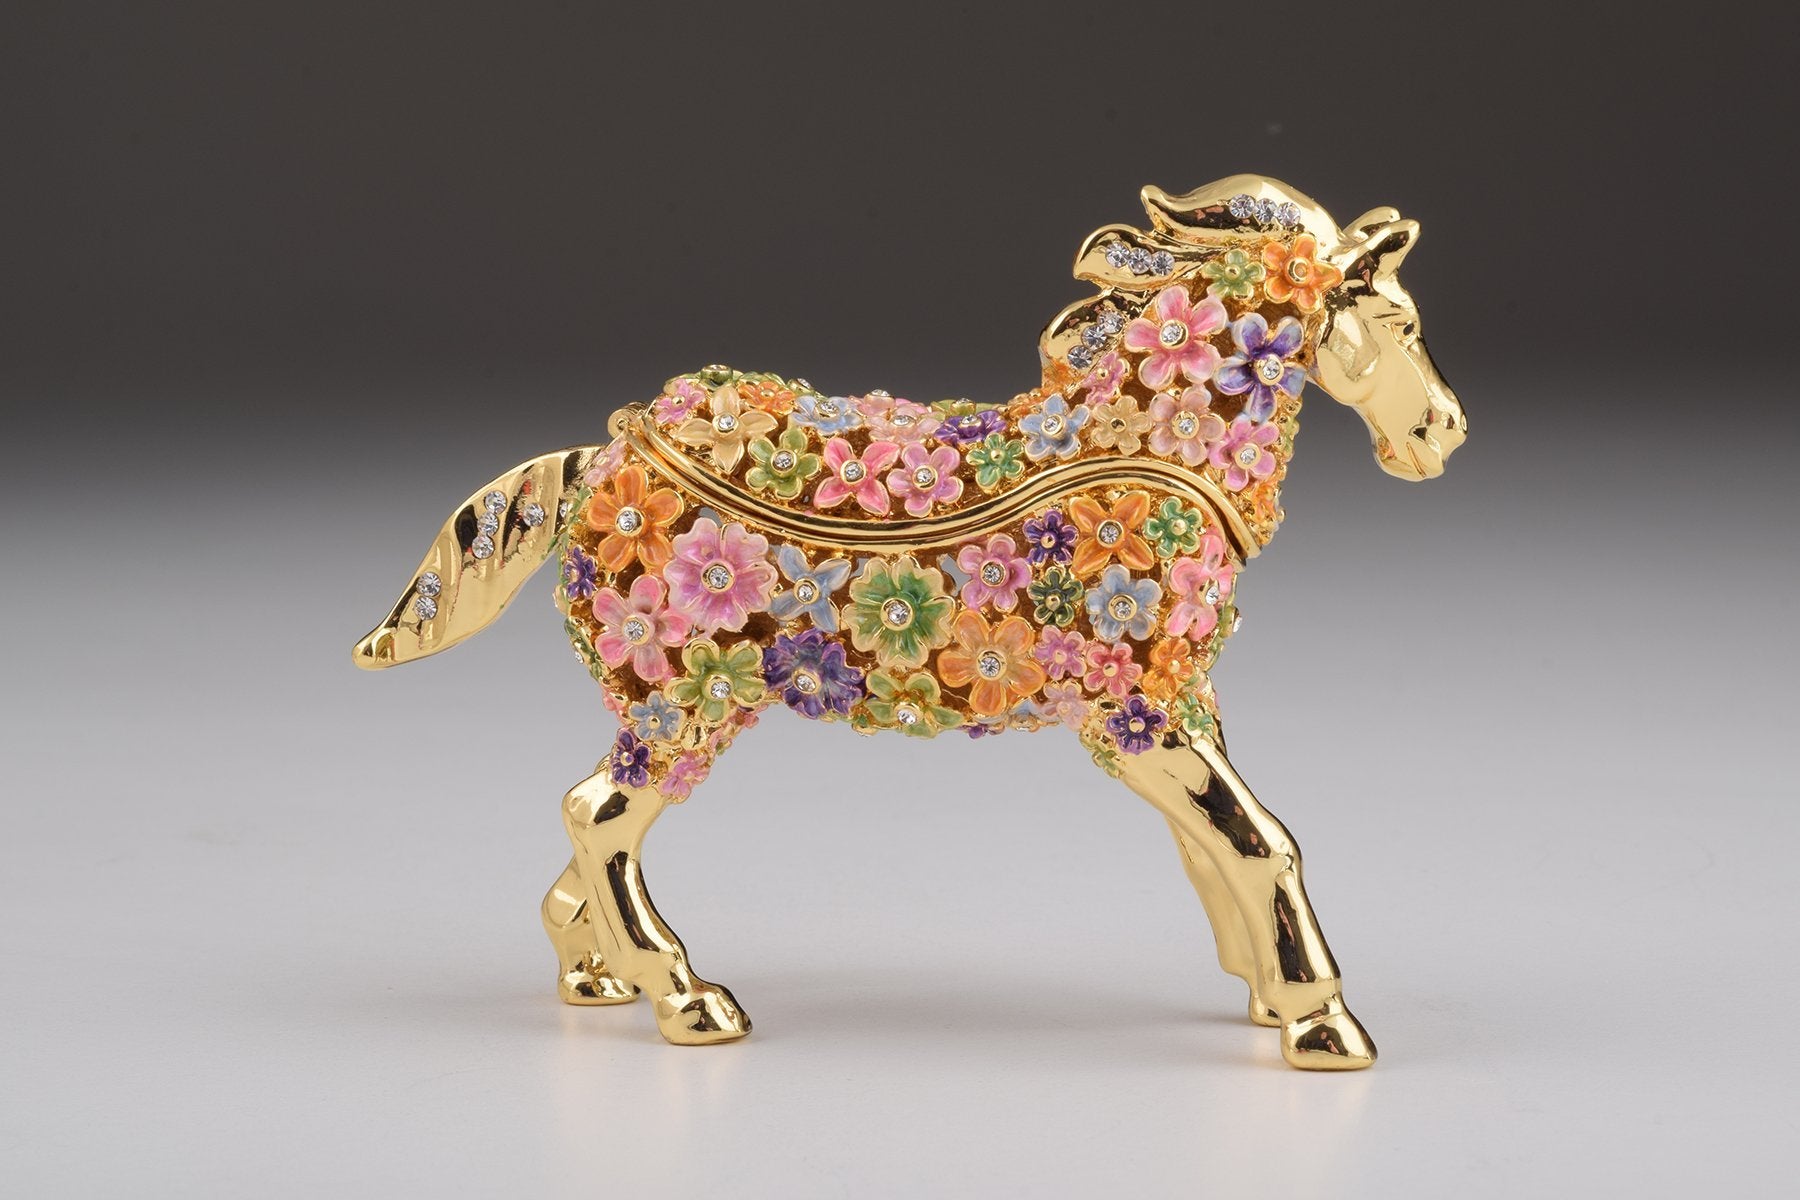 Keren Kopal Gold with Colorful Flowers Horse Trinket Box  104.00